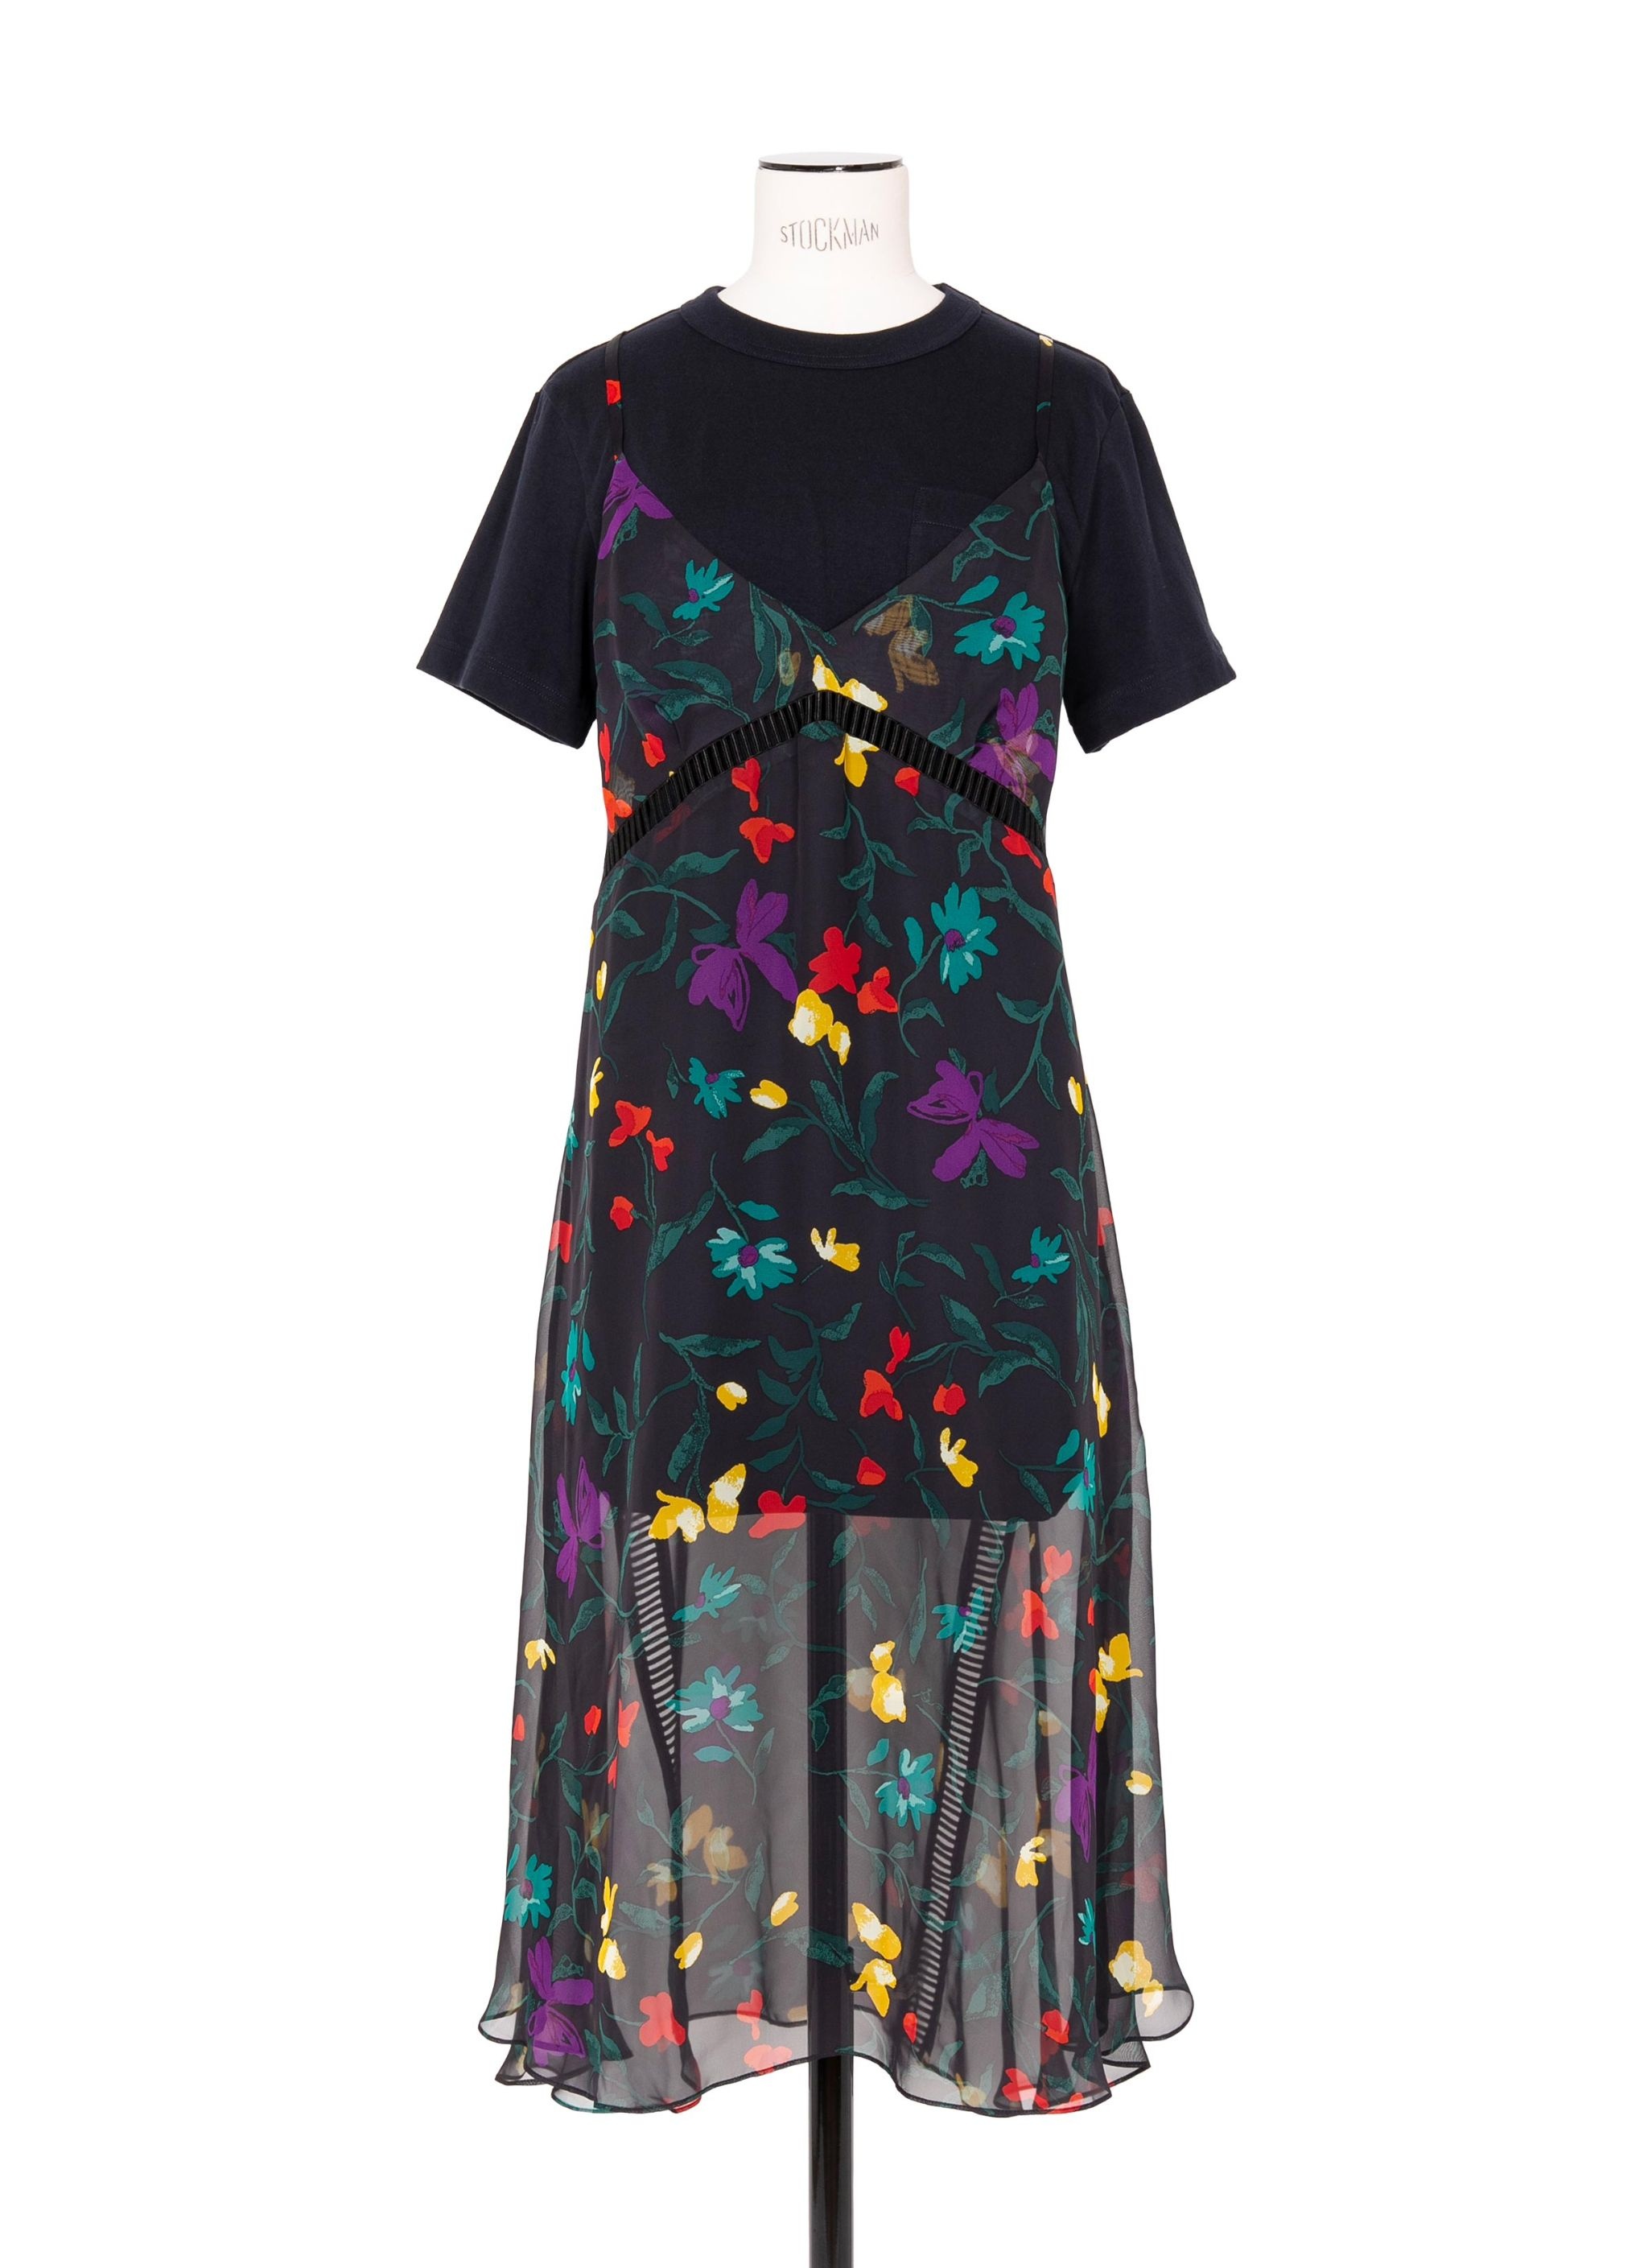 Floral Print Cotton Jersey Dress - 2